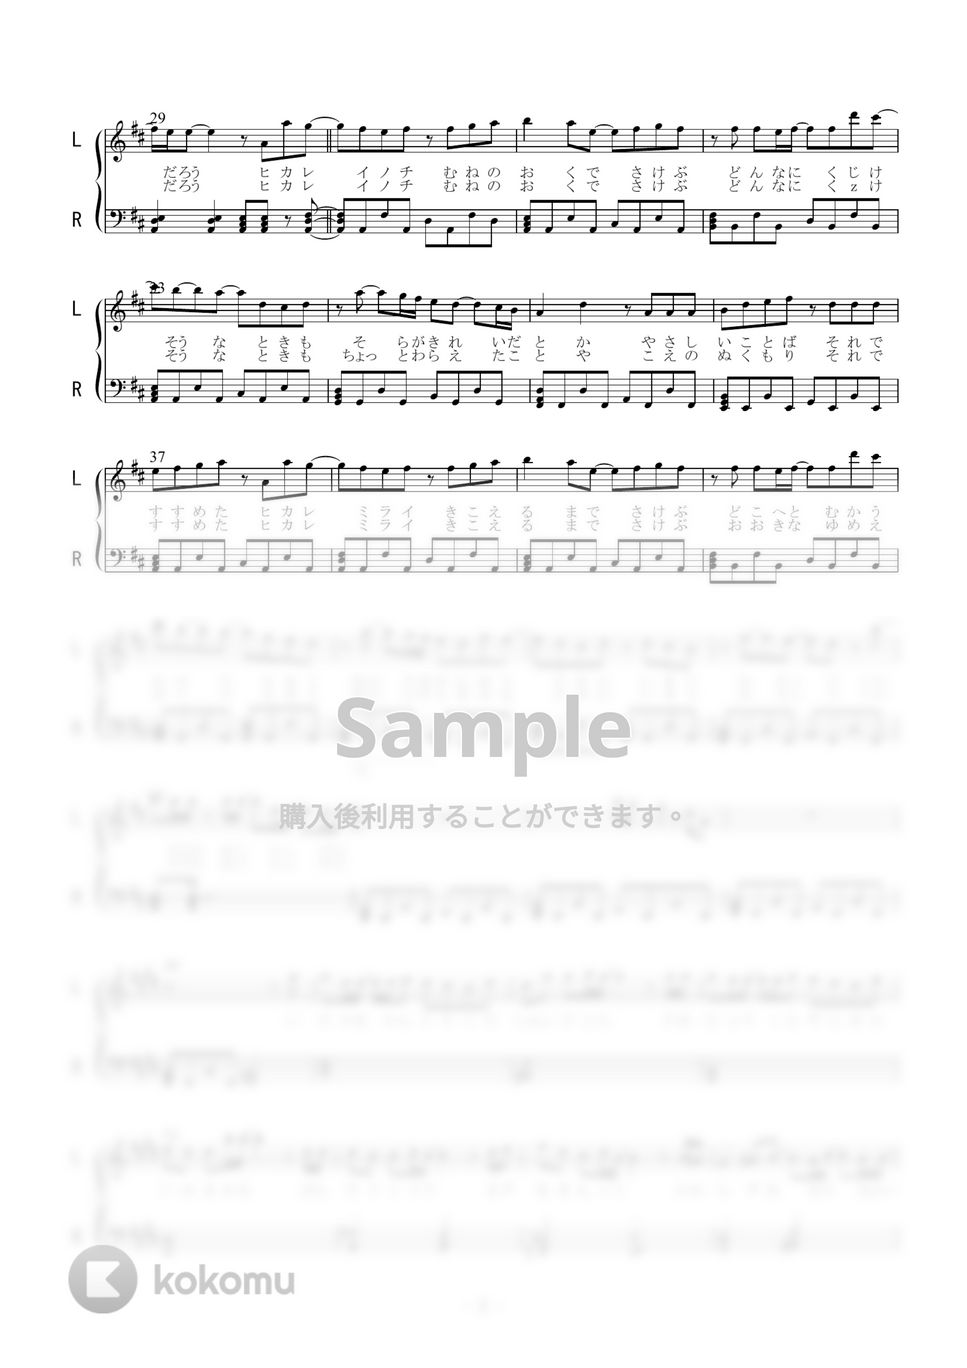 Kitri - ヒカレイノチ (ピアノソロ) by 二次元楽譜製作所